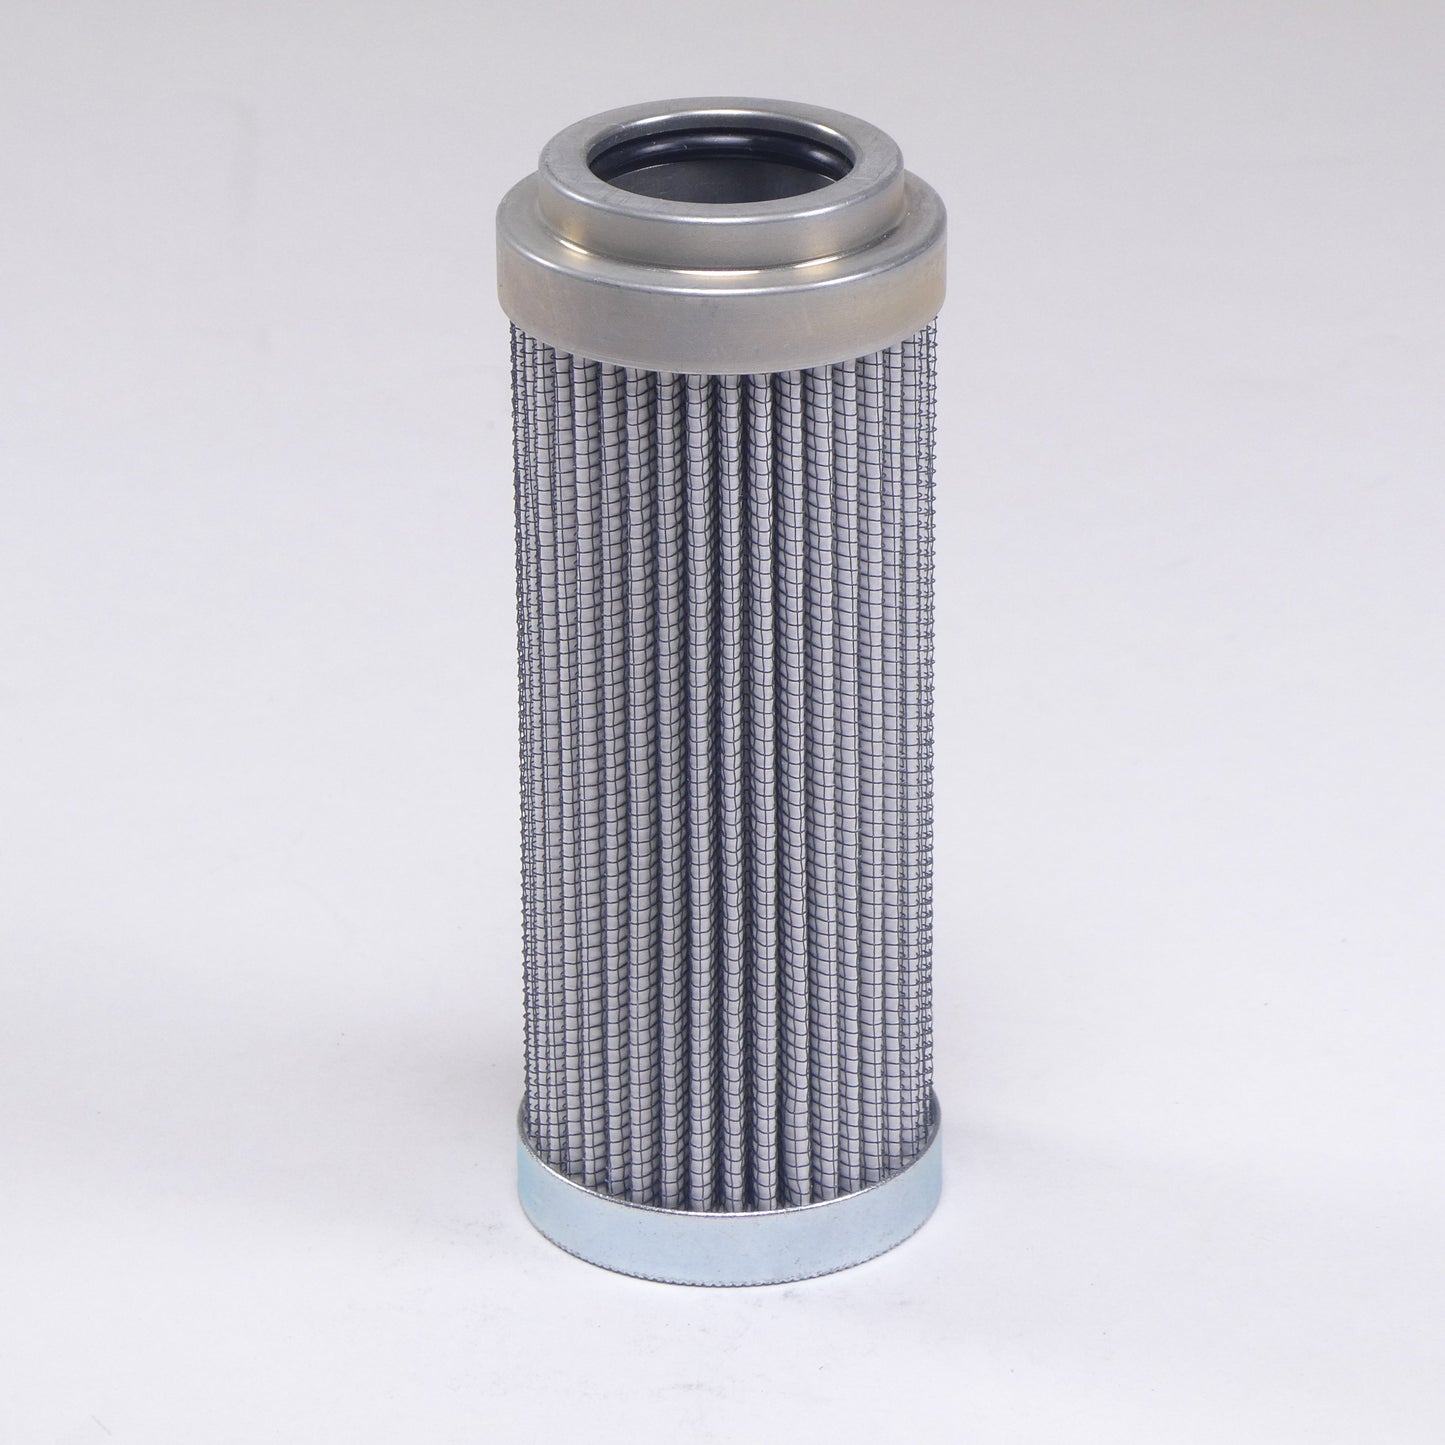 Hydrafil Replacement Filter Element for Finn 43151